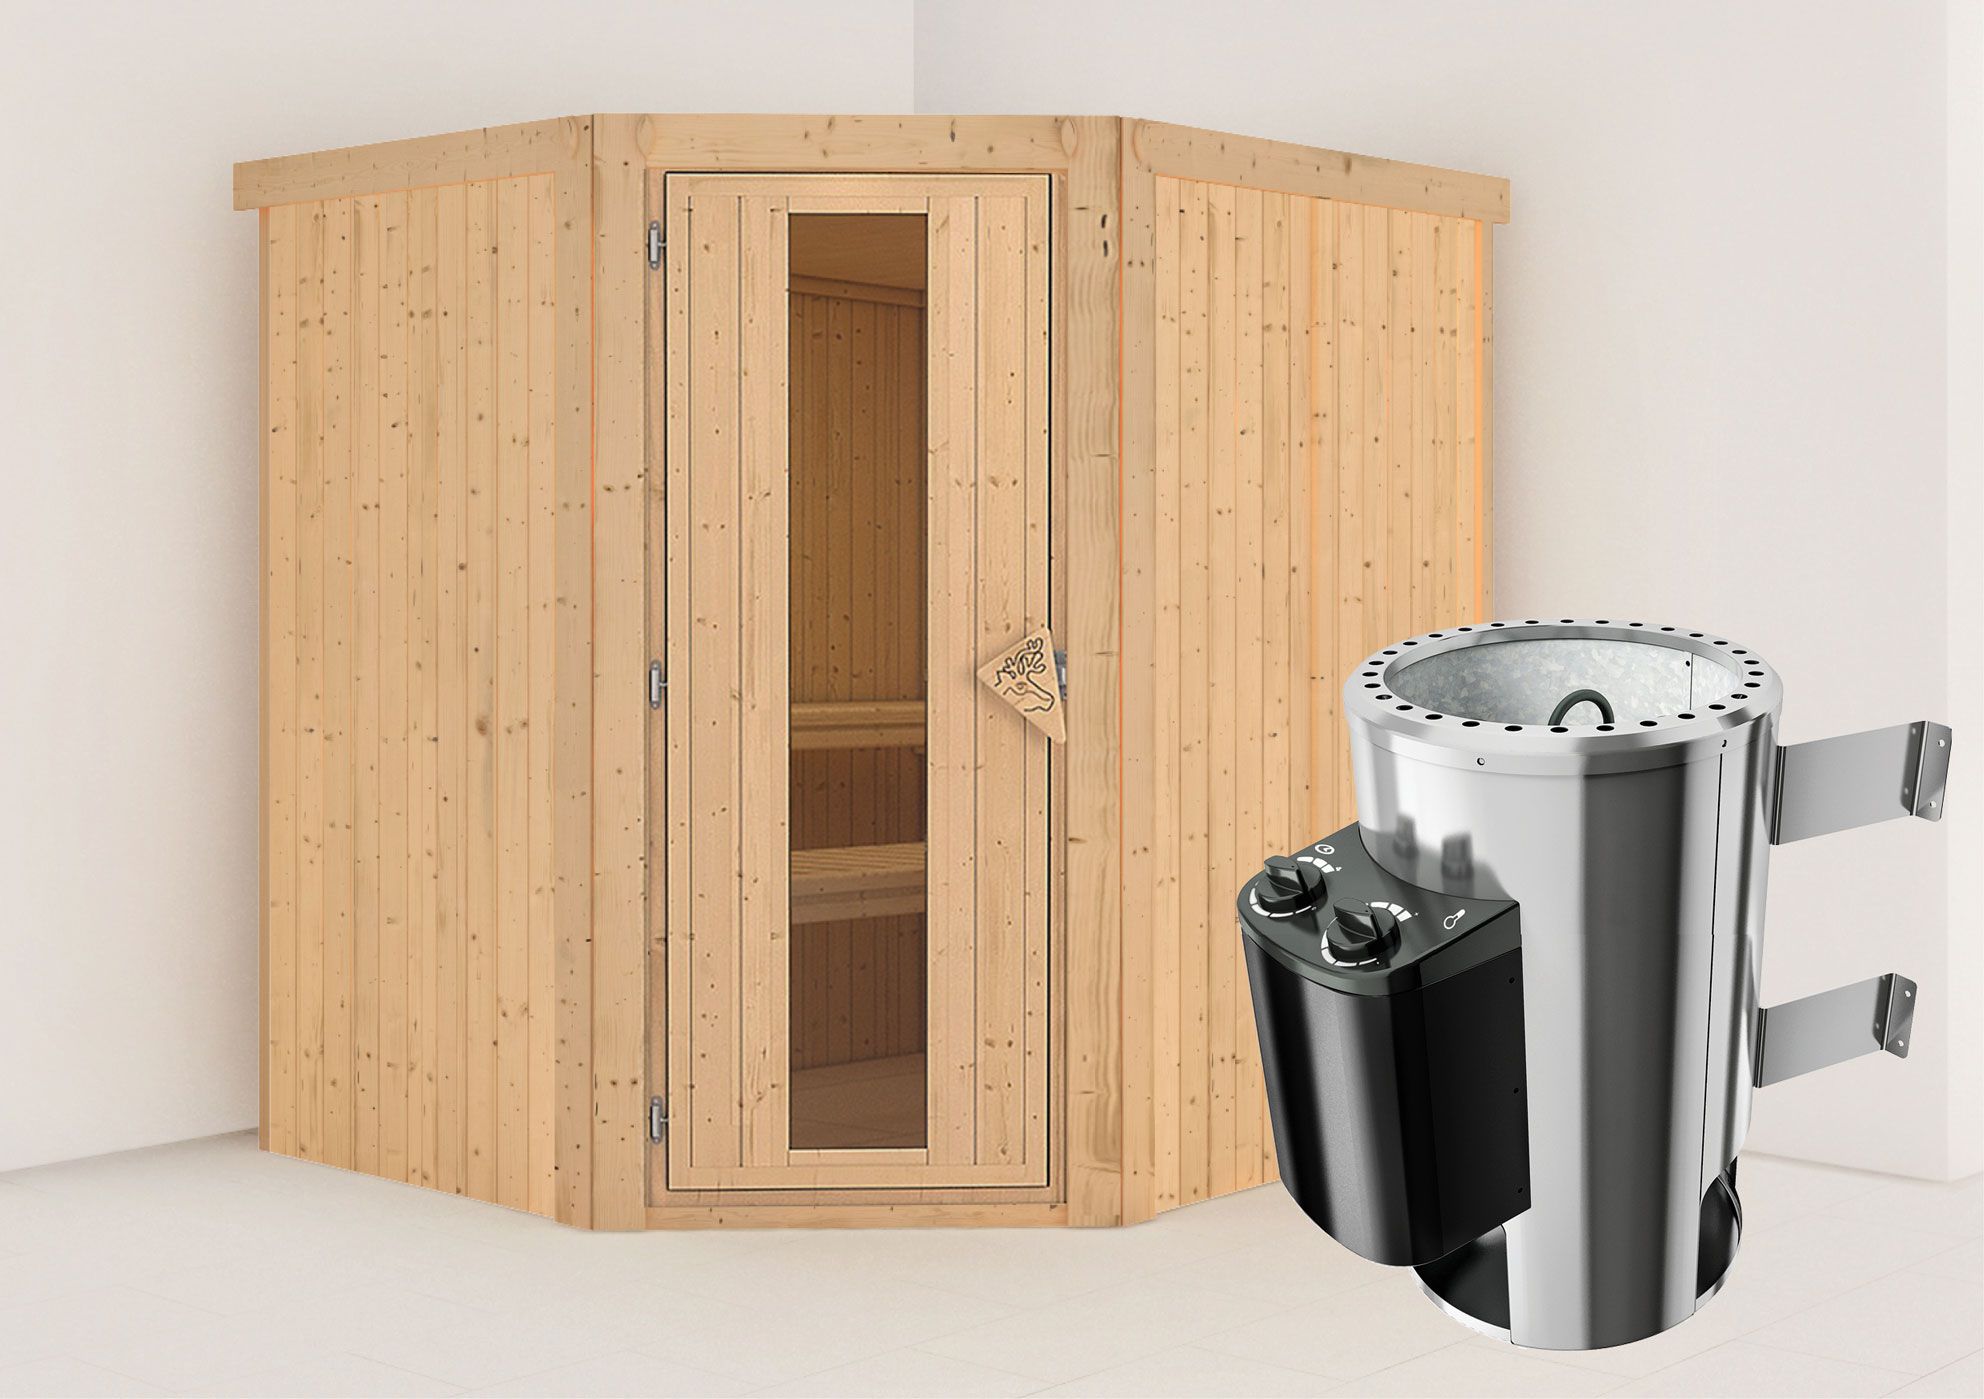 Sauna "Askjell" SET met energiebesparende deur en kachel 3,6 kW - 196 x 170 x 198 cm (B x D x H)